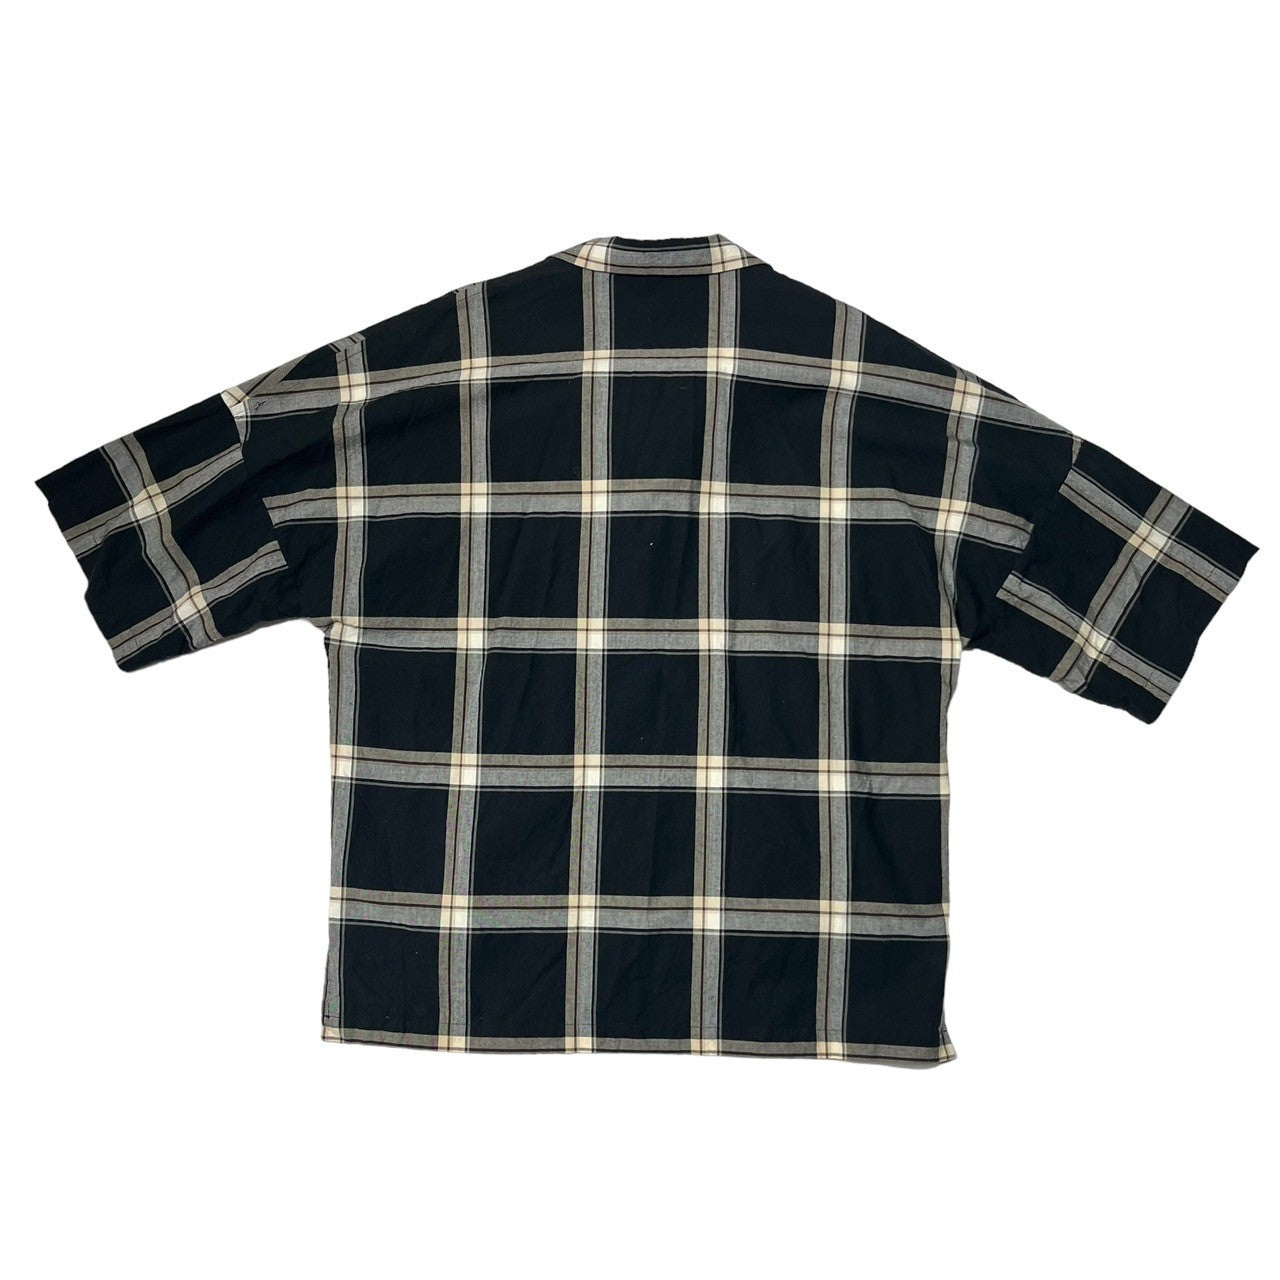 SUNSEA(サンシー) 17SS CHECK FRIED SHRIMP SHIRT チェック フライドシュリンプ シャツ 半袖 開襟 シャツ オープンカラー 17S17 SIZE 3(L) ブラック×グレー